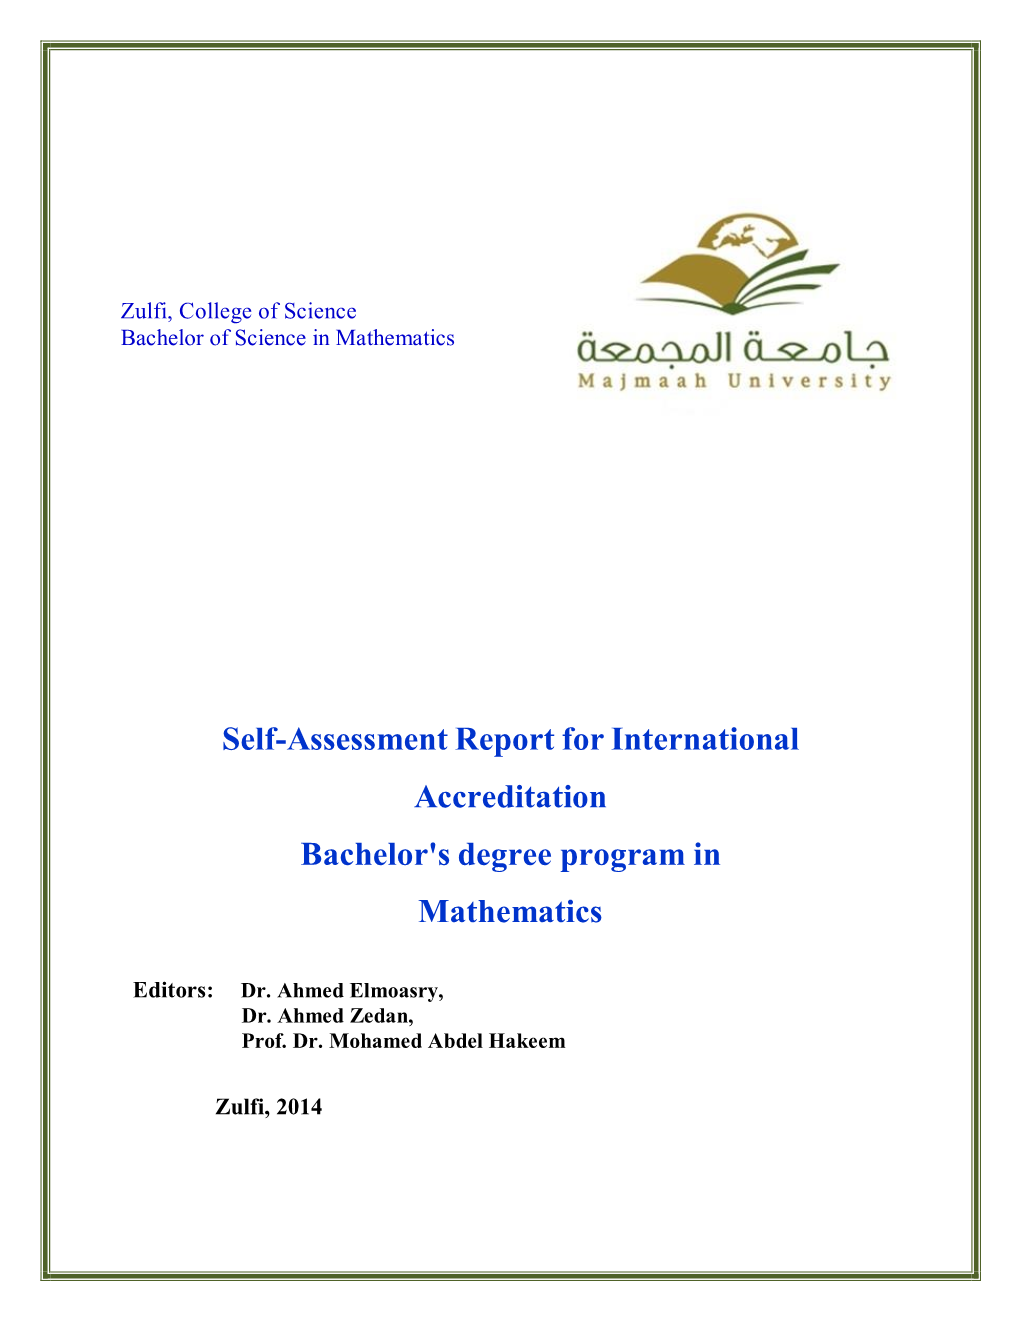 Self-Assessment Report for International Accreditation Bachelor's Degree Program in Mathematics